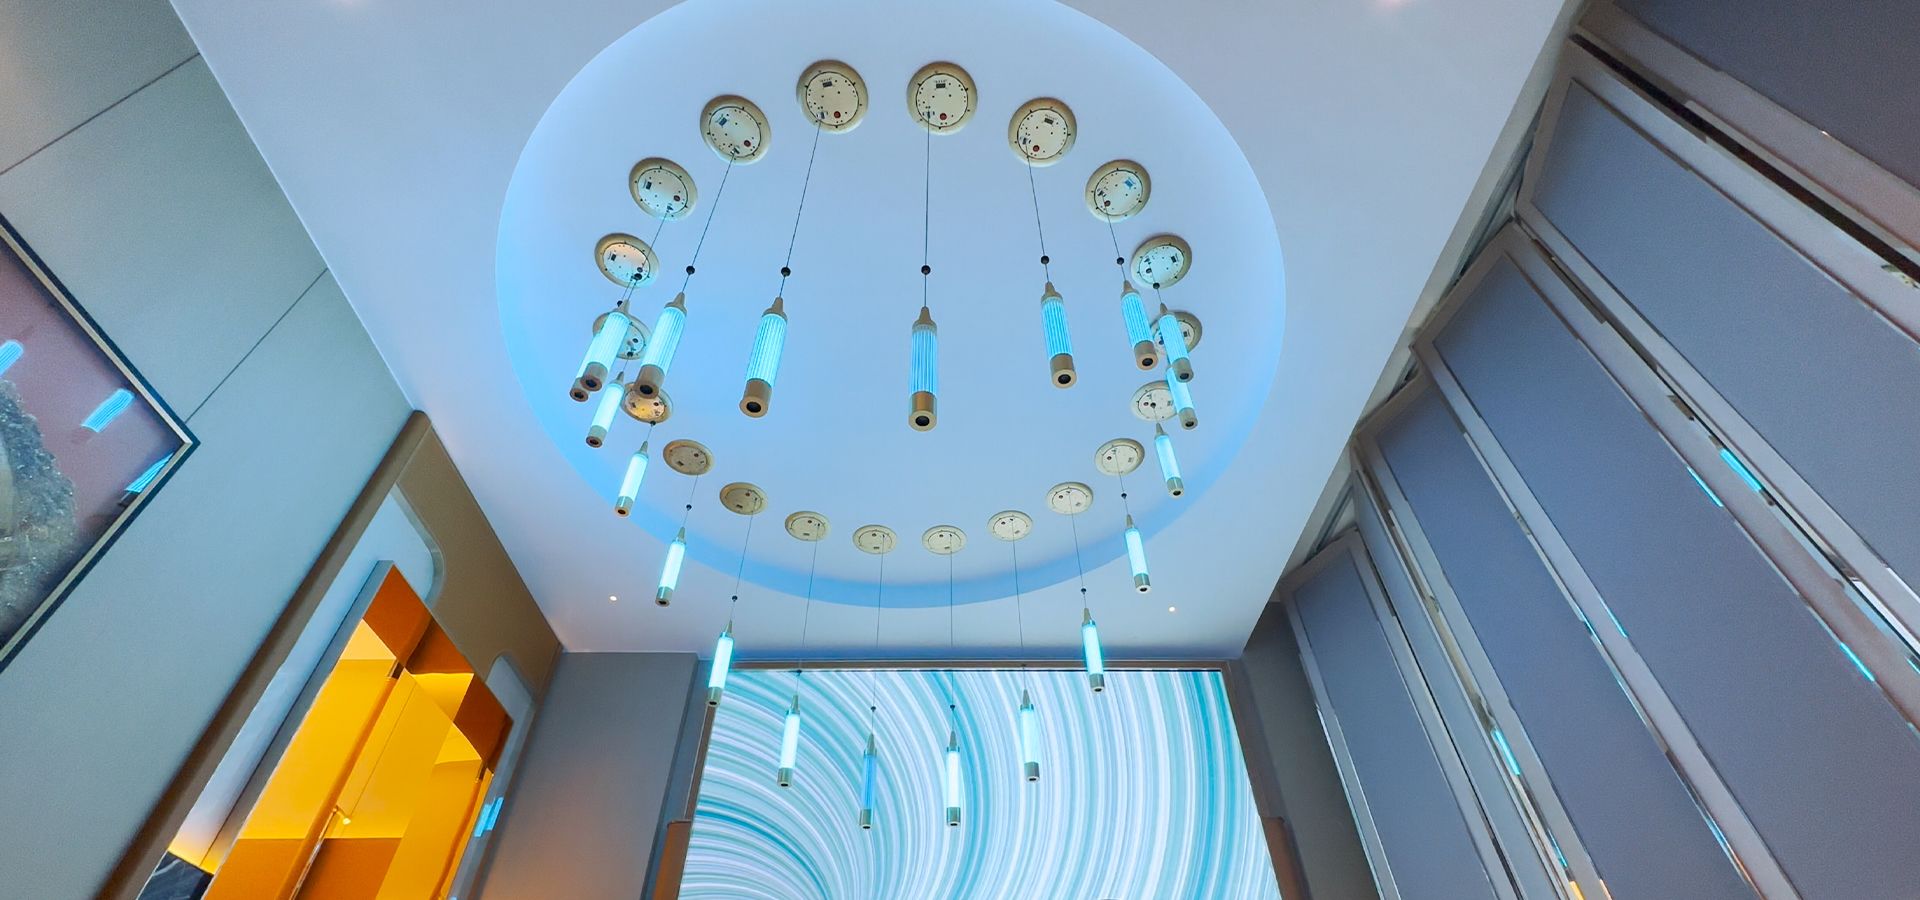 EMIC יוצרים חלל אמנות מפואר וחדר קבלת פנים עם אורות קינטיים